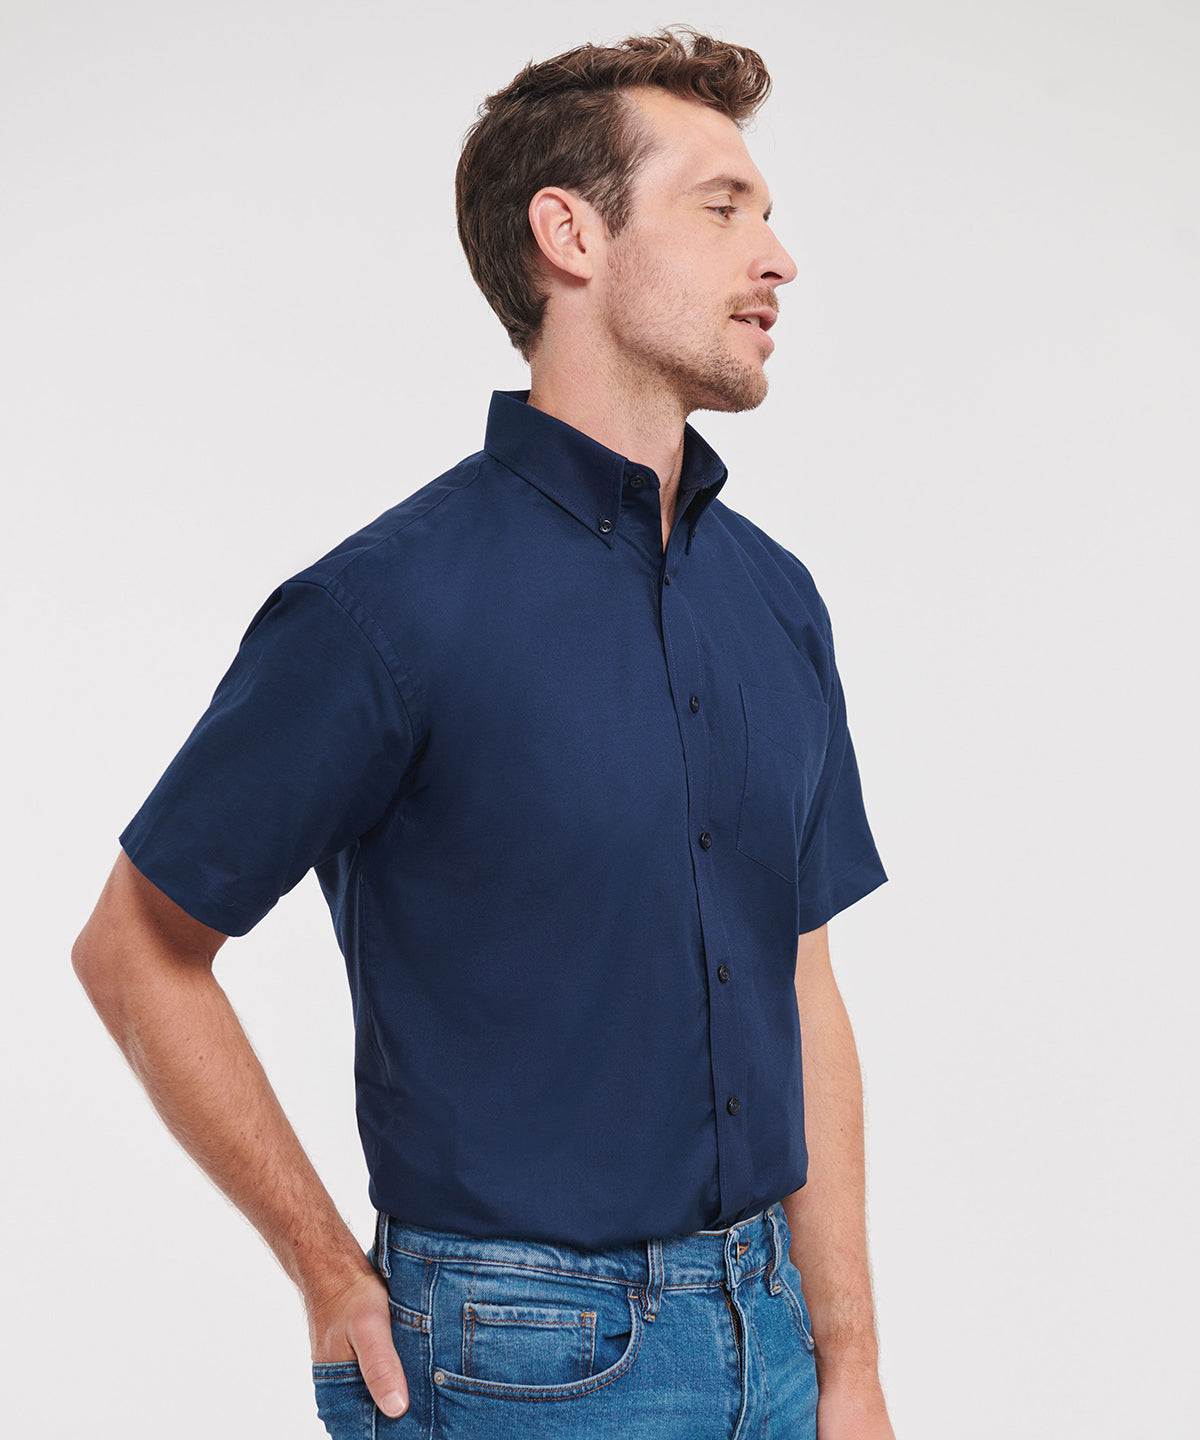 Bolir - Short Sleeve Easycare Oxford Shirt